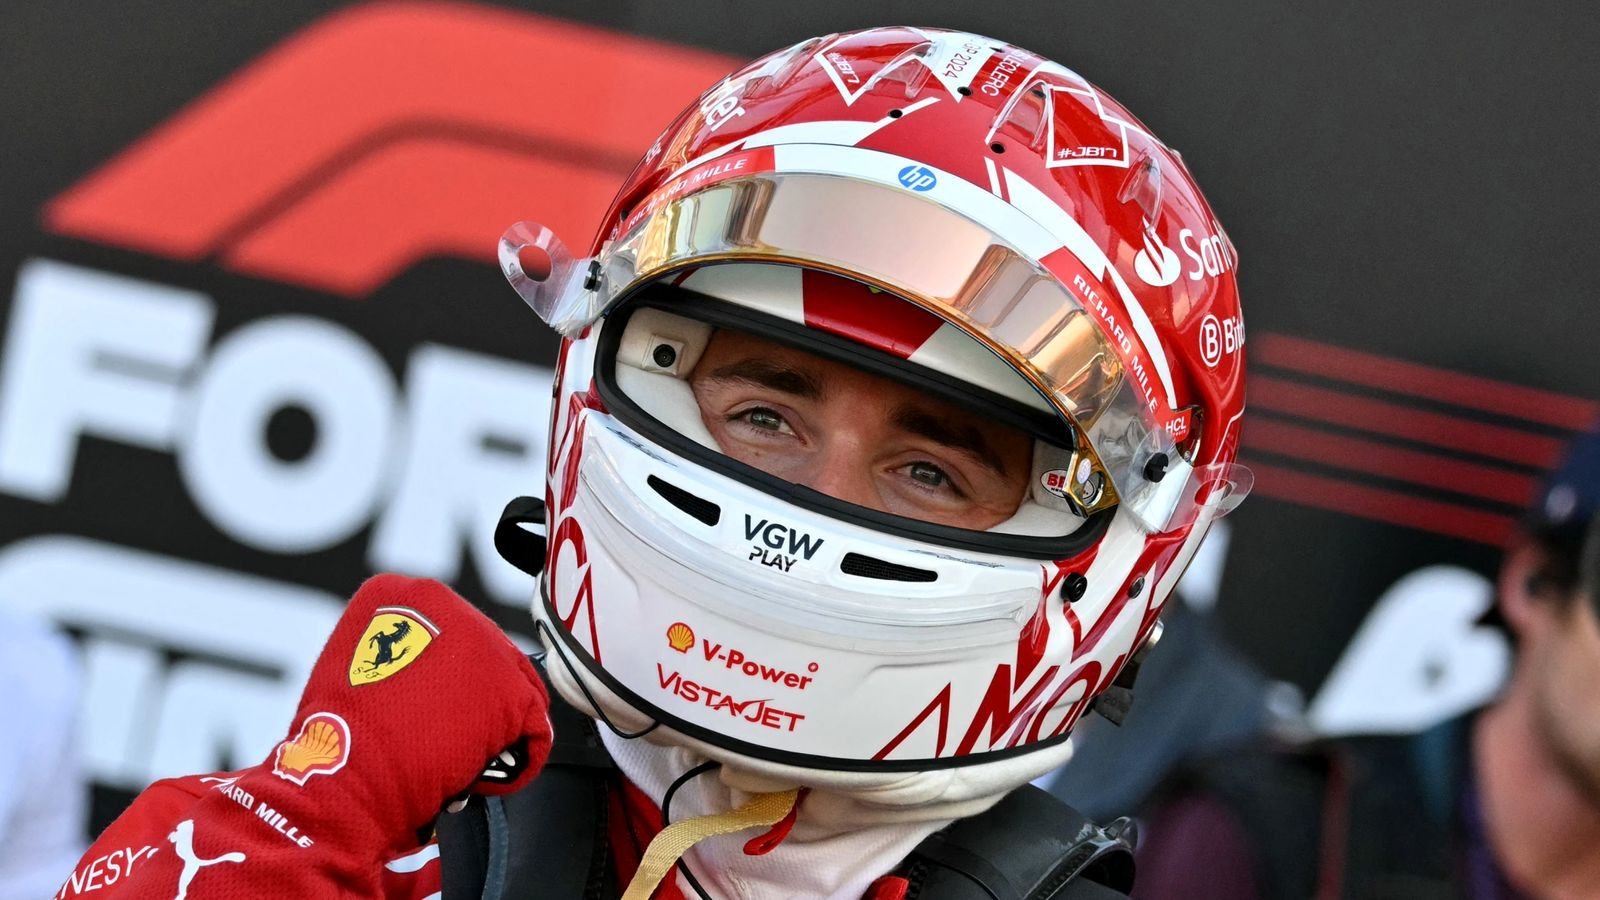 Monaco GP Qualifying: Charles Leclerc edges out Oscar Piastri to take pole for Ferrari at his home race | F1 News